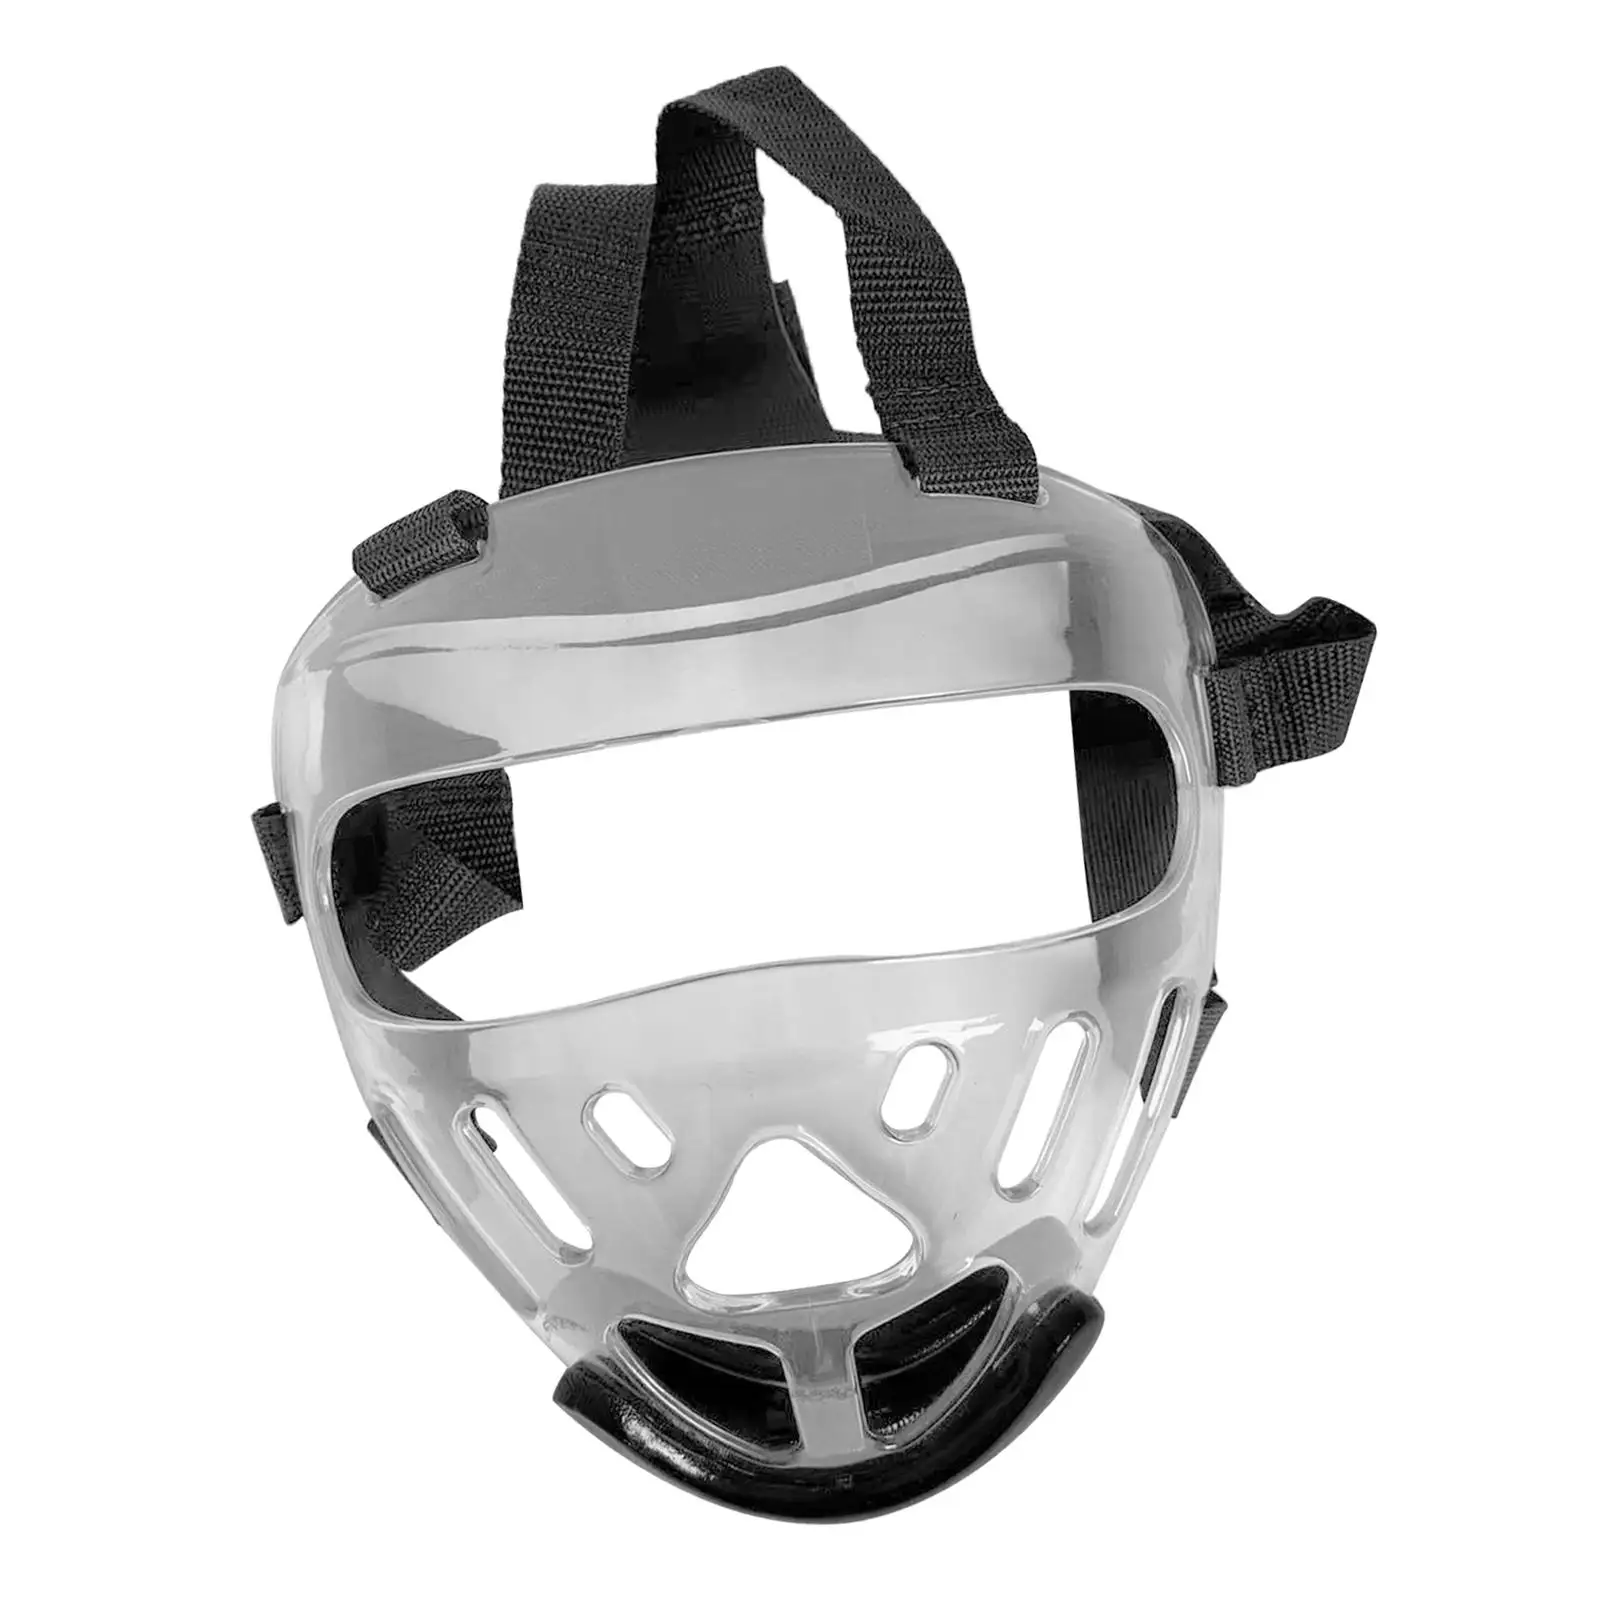 Taekwondo Face Mask Kids Taekwondo Face Shield Boxing Headgear Mask Detachable Face Guard Head Cover for Boxing Sanda Sparring